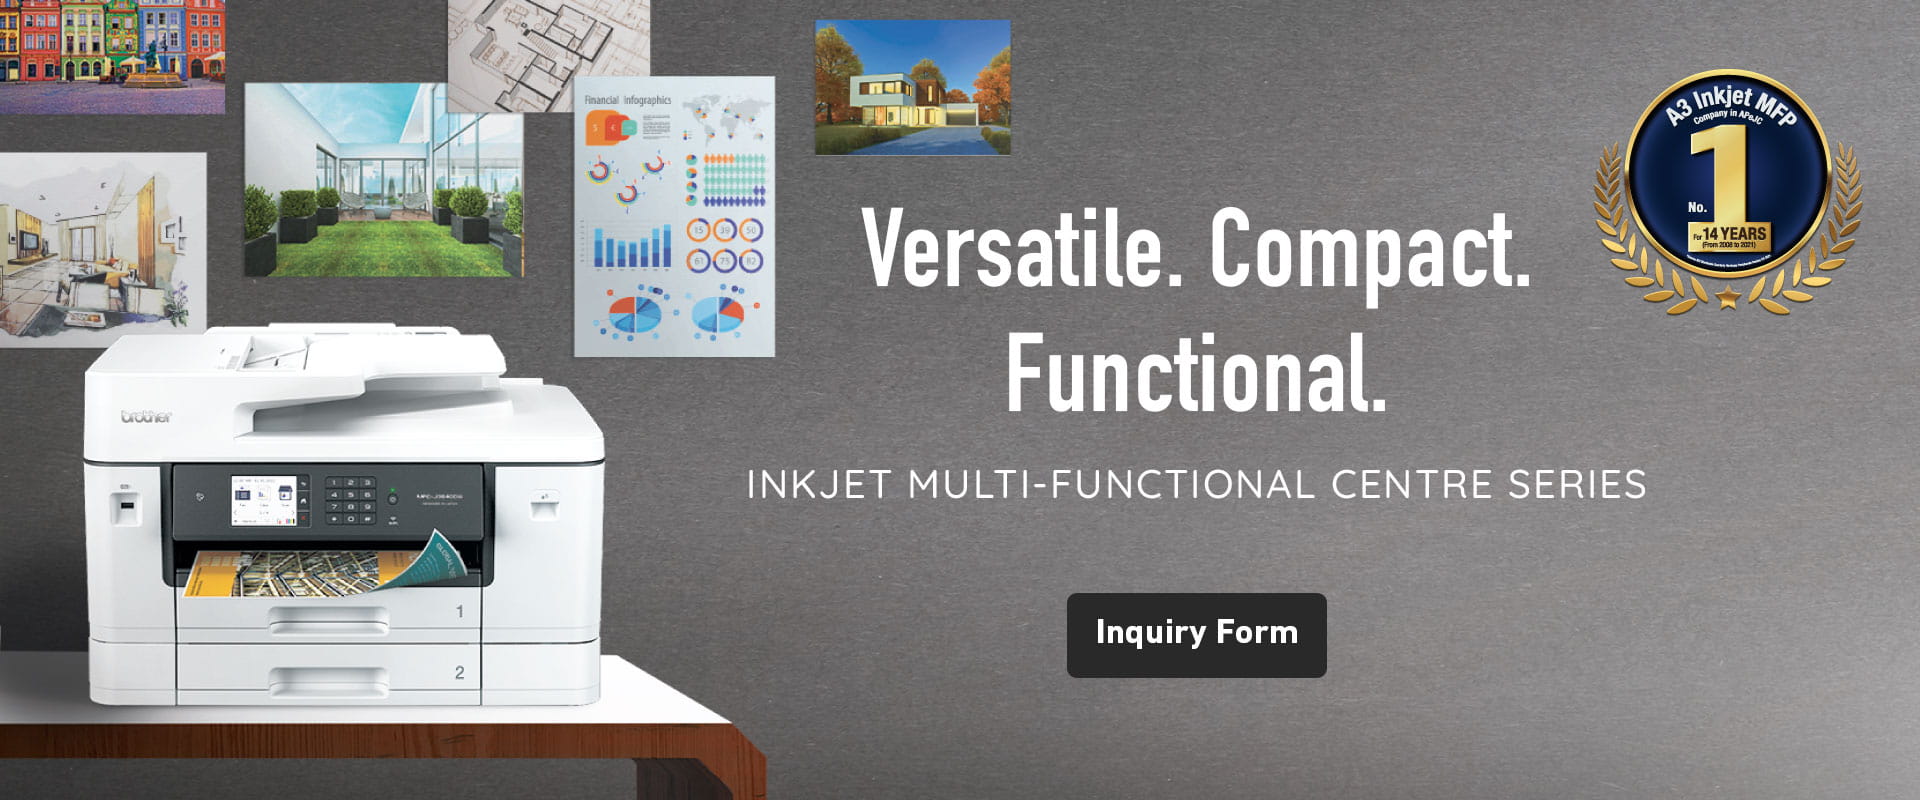 Versatile. Compact. Functional. INKJET MULTI-FUNCTIONAL CENTRE SERIES